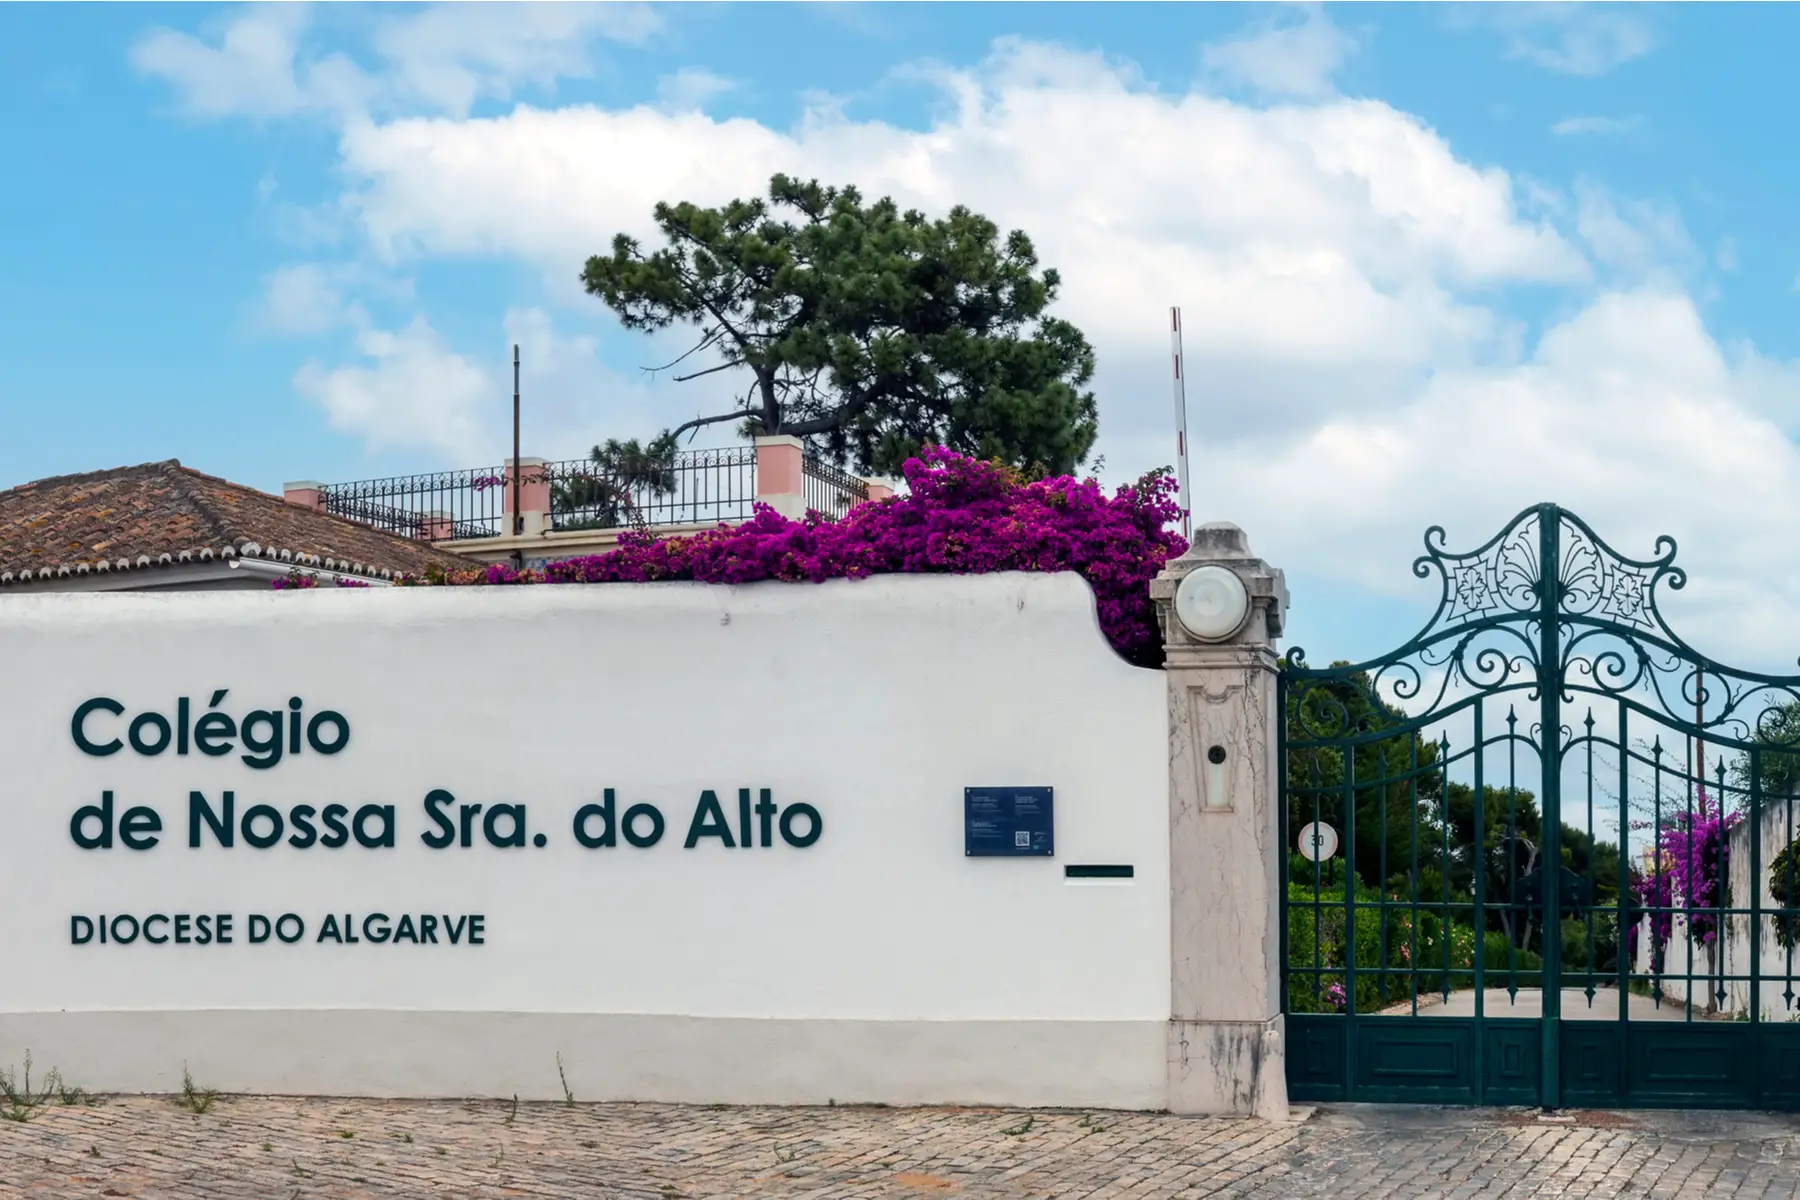 Colégio De Nossa Senhora Do Alto Catholic school in Faro, Portugal